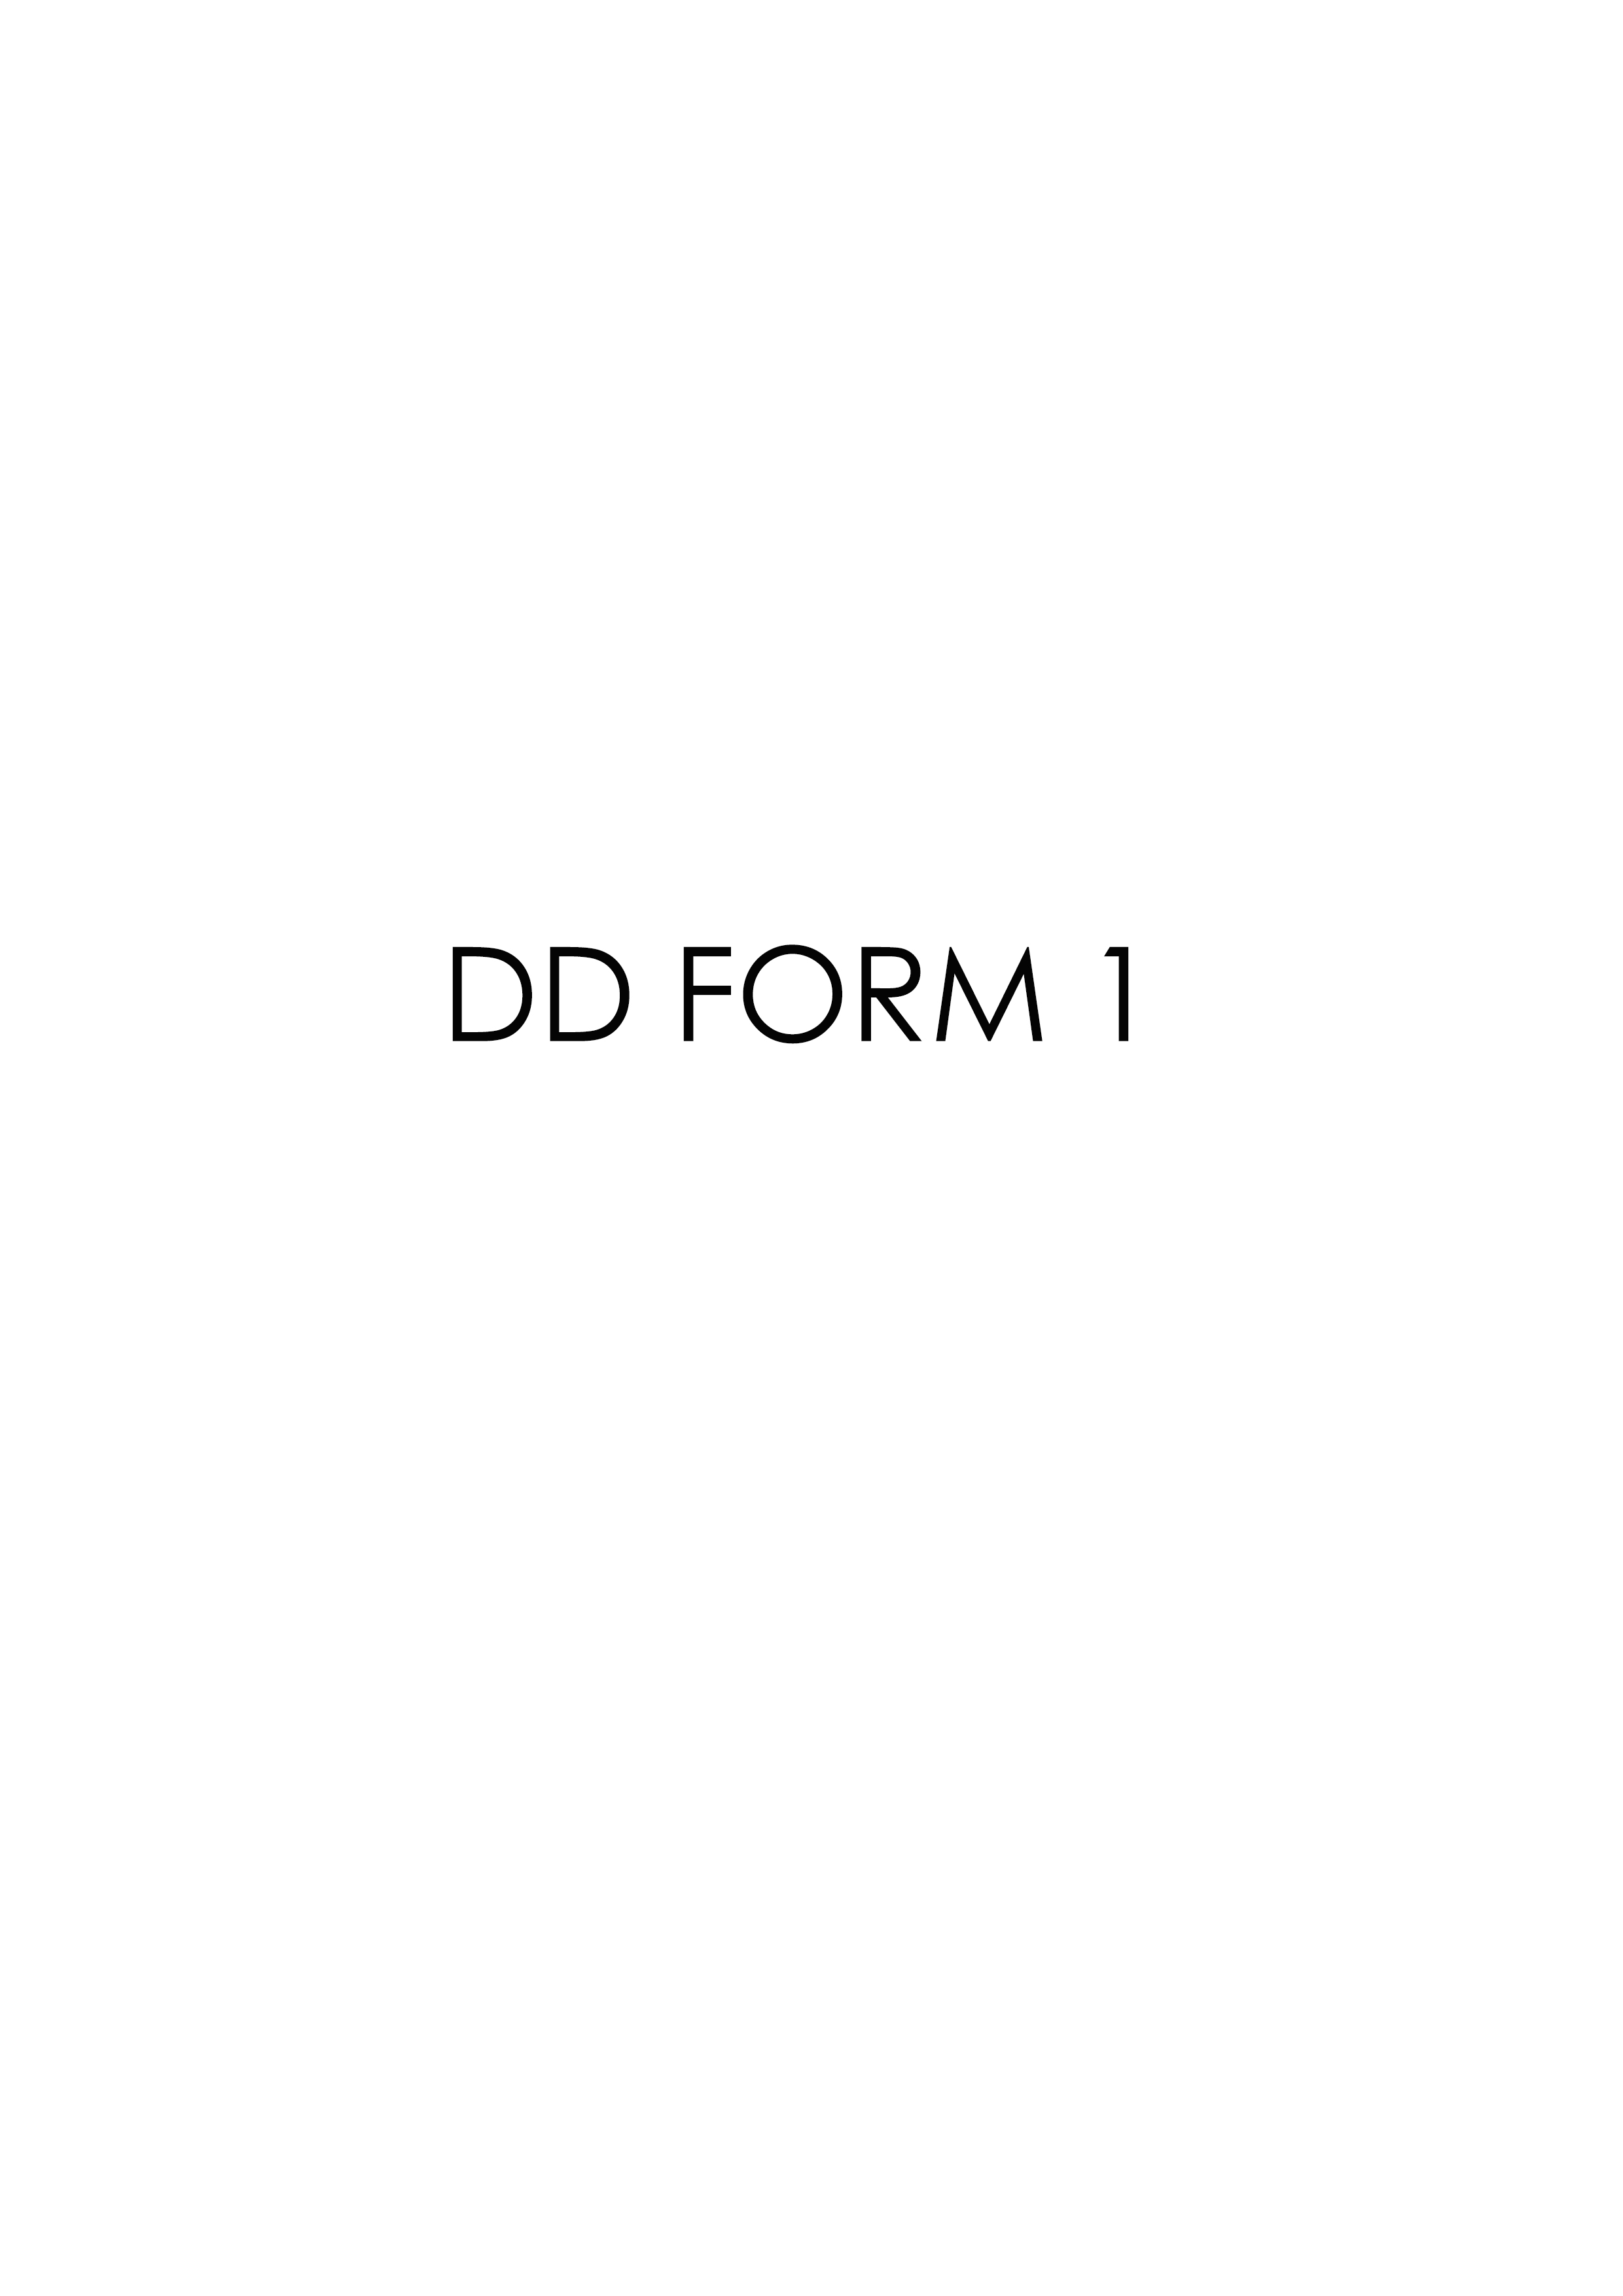 Download dd Form 1